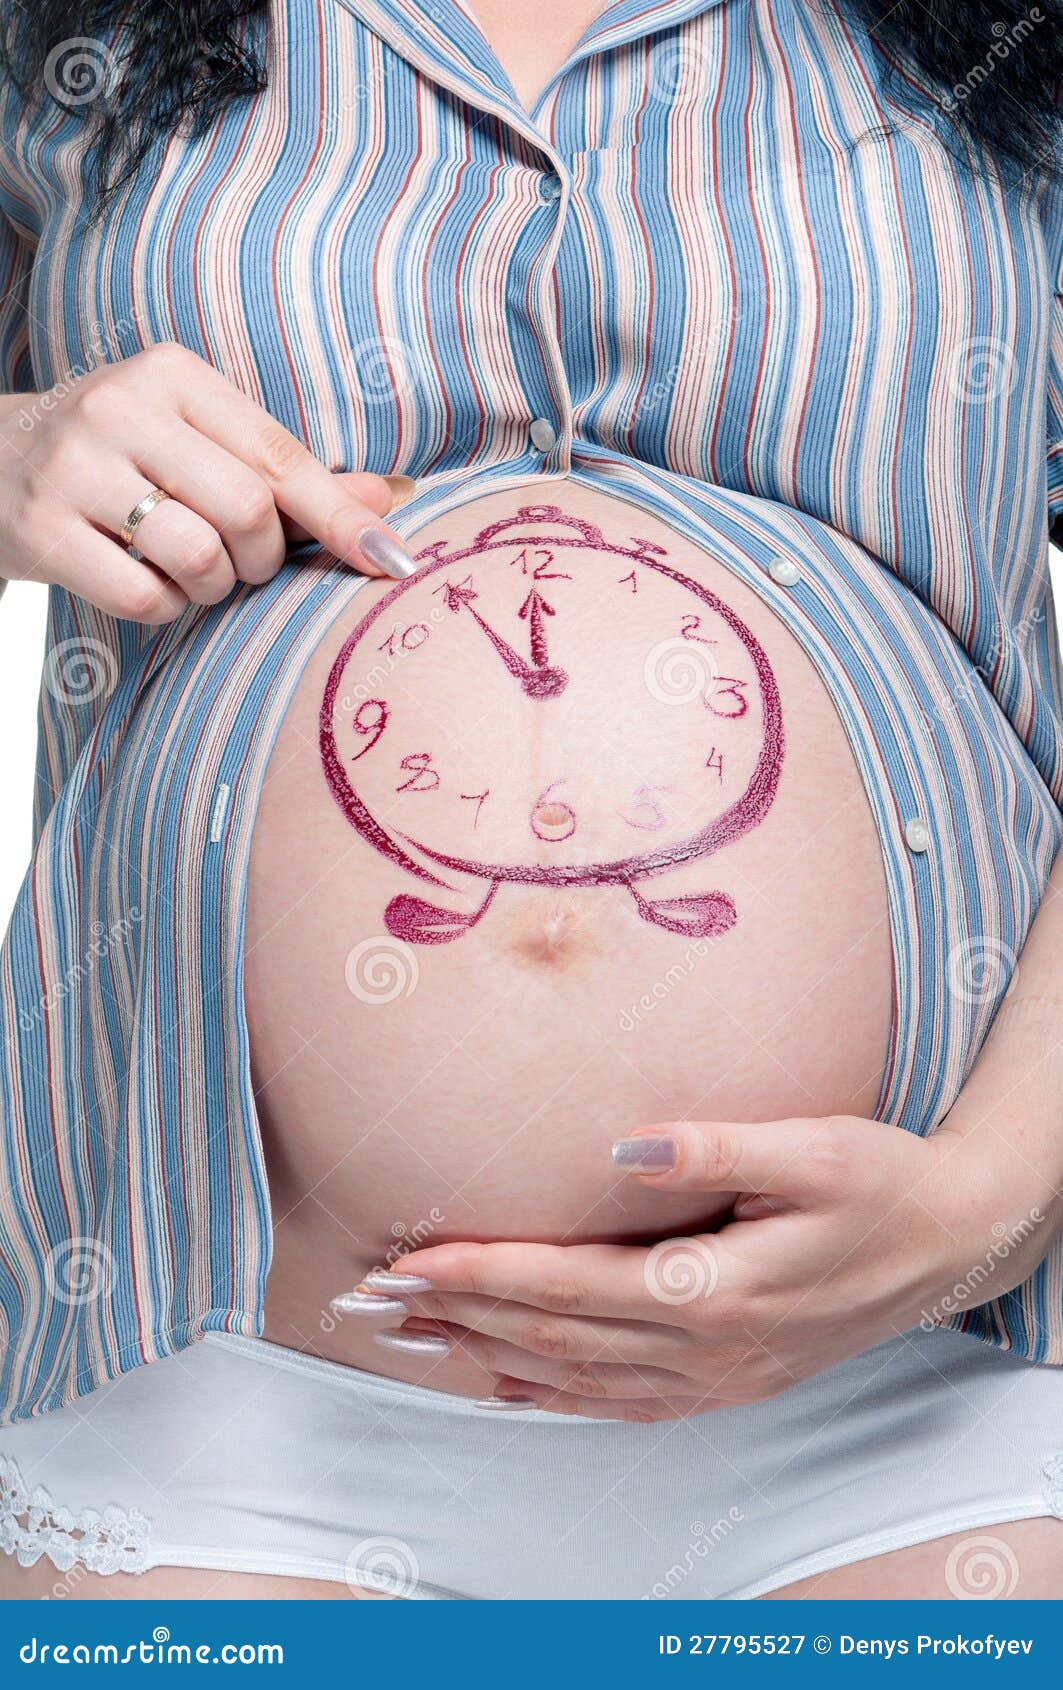 Harmless Henna Floral Drawing Art on Boho Pregnant Woman Tummy